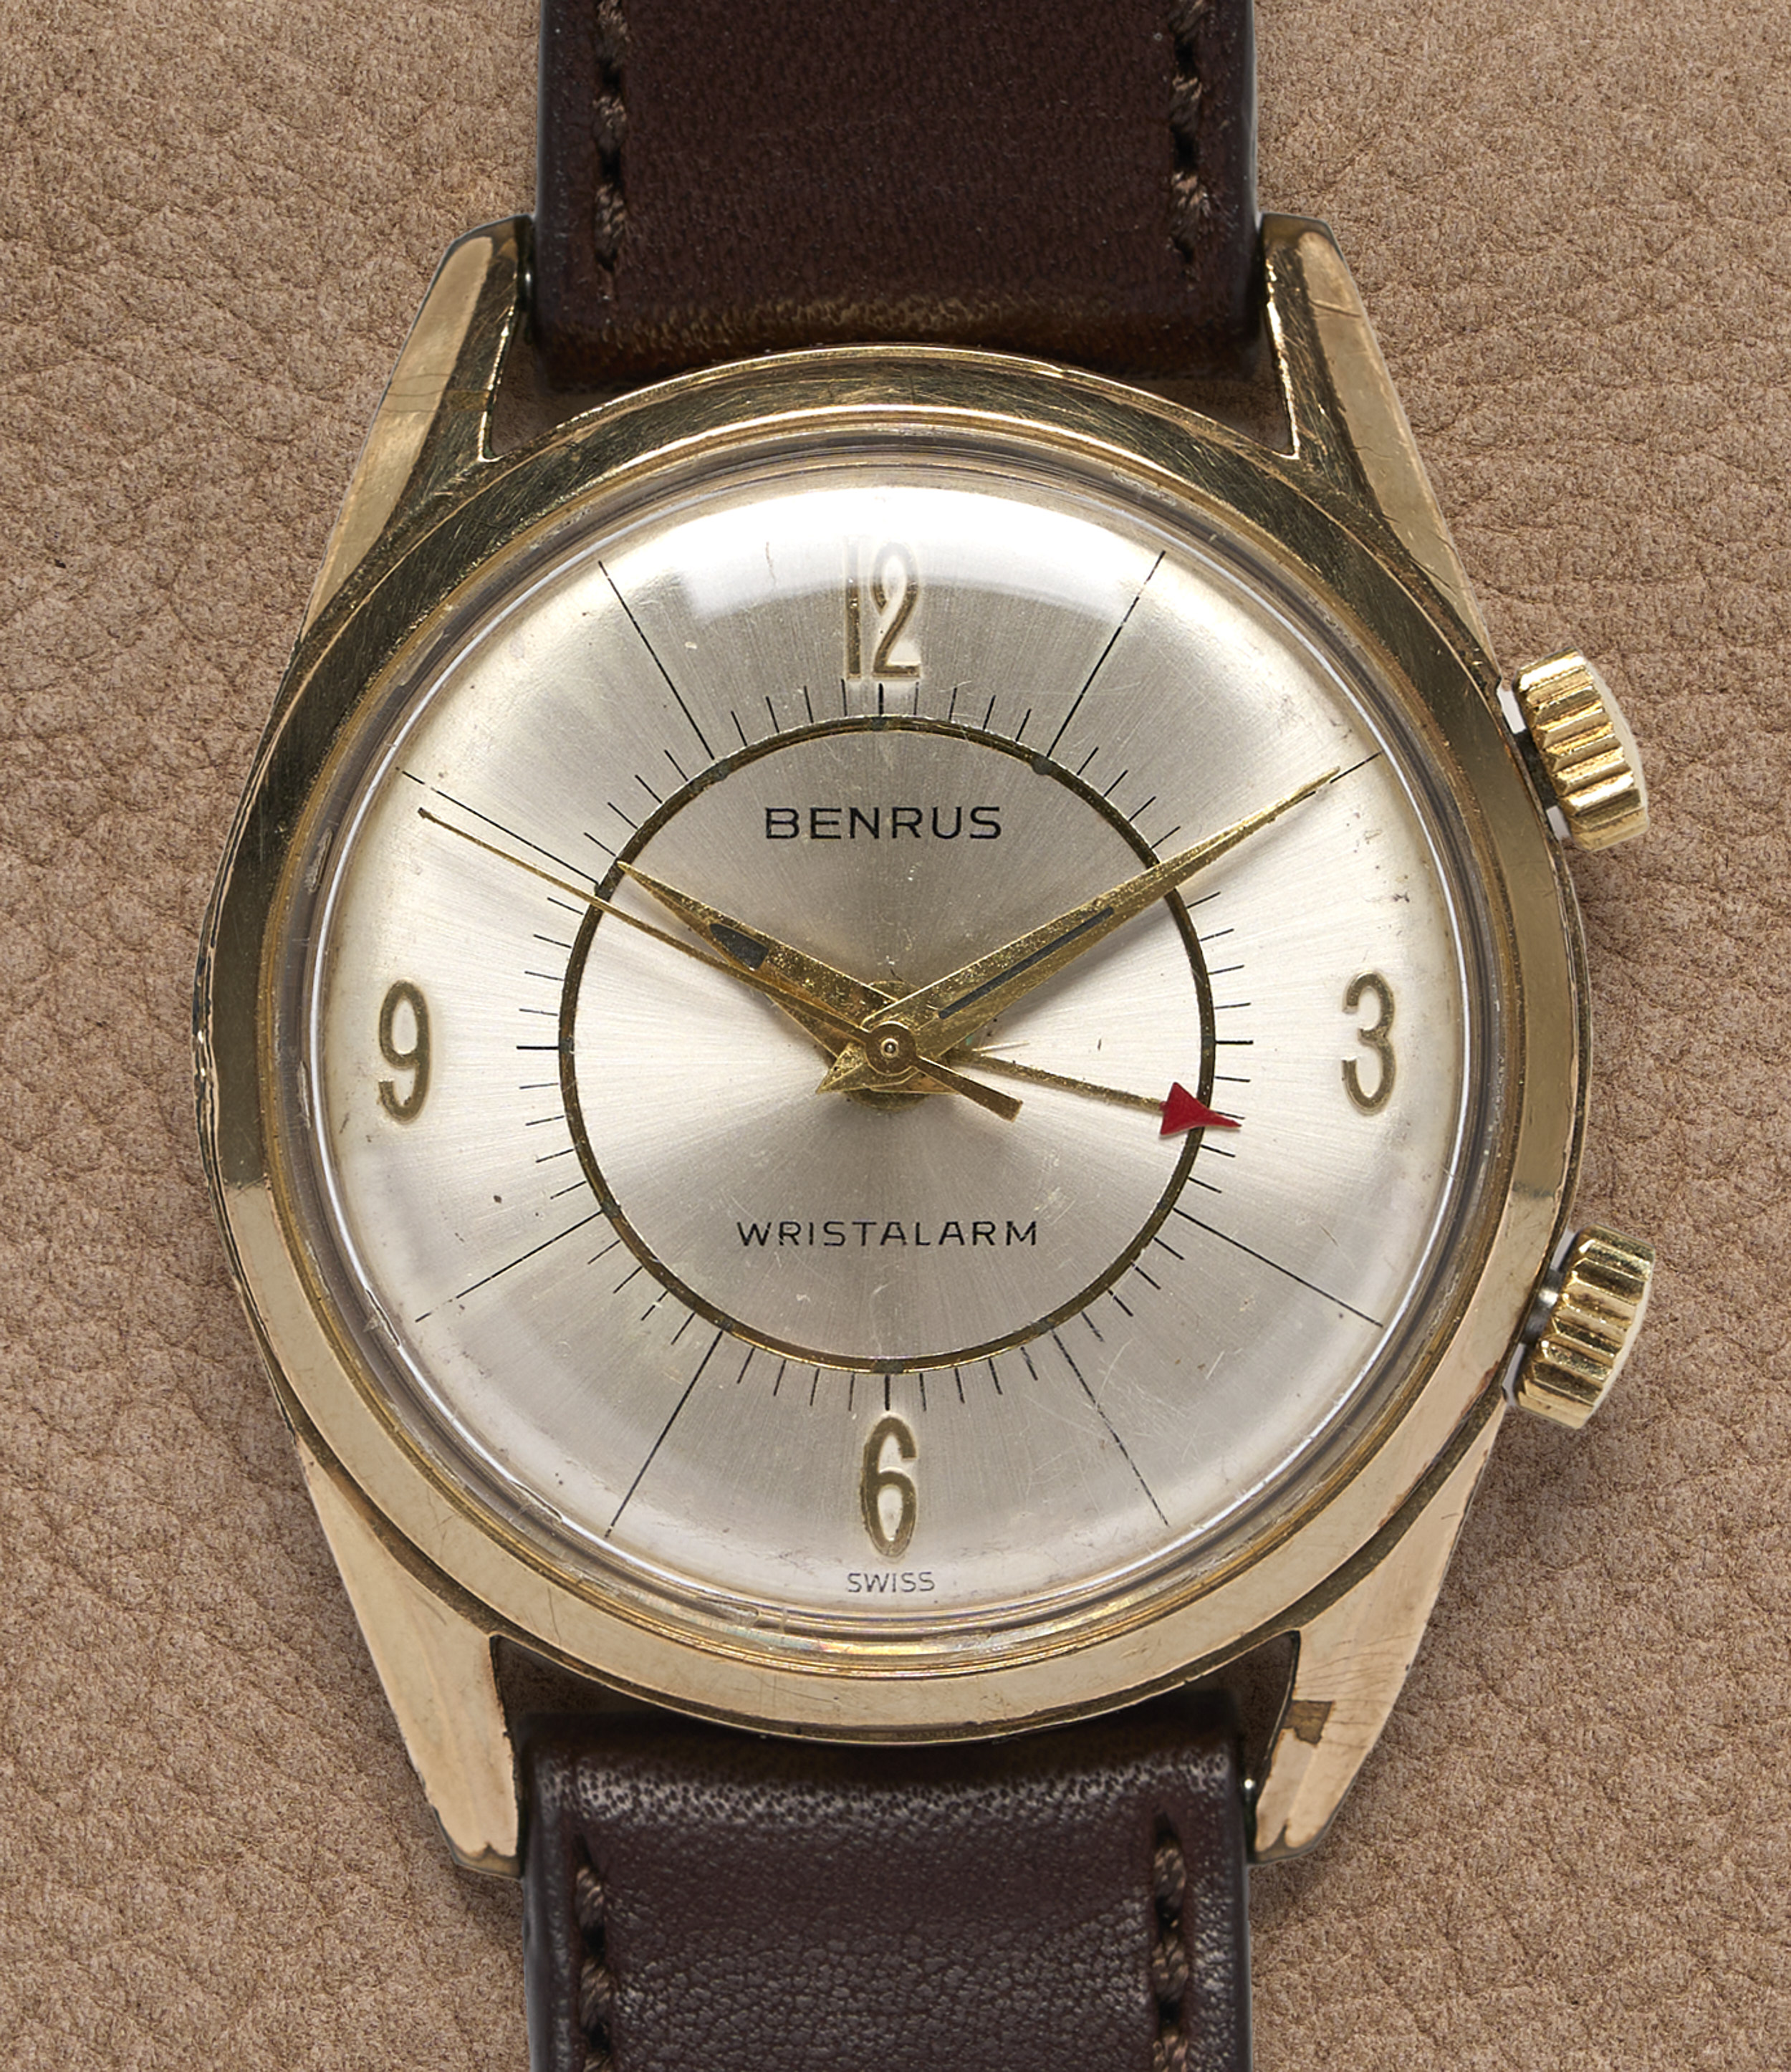 1960’s Benrus Wrist Alarm